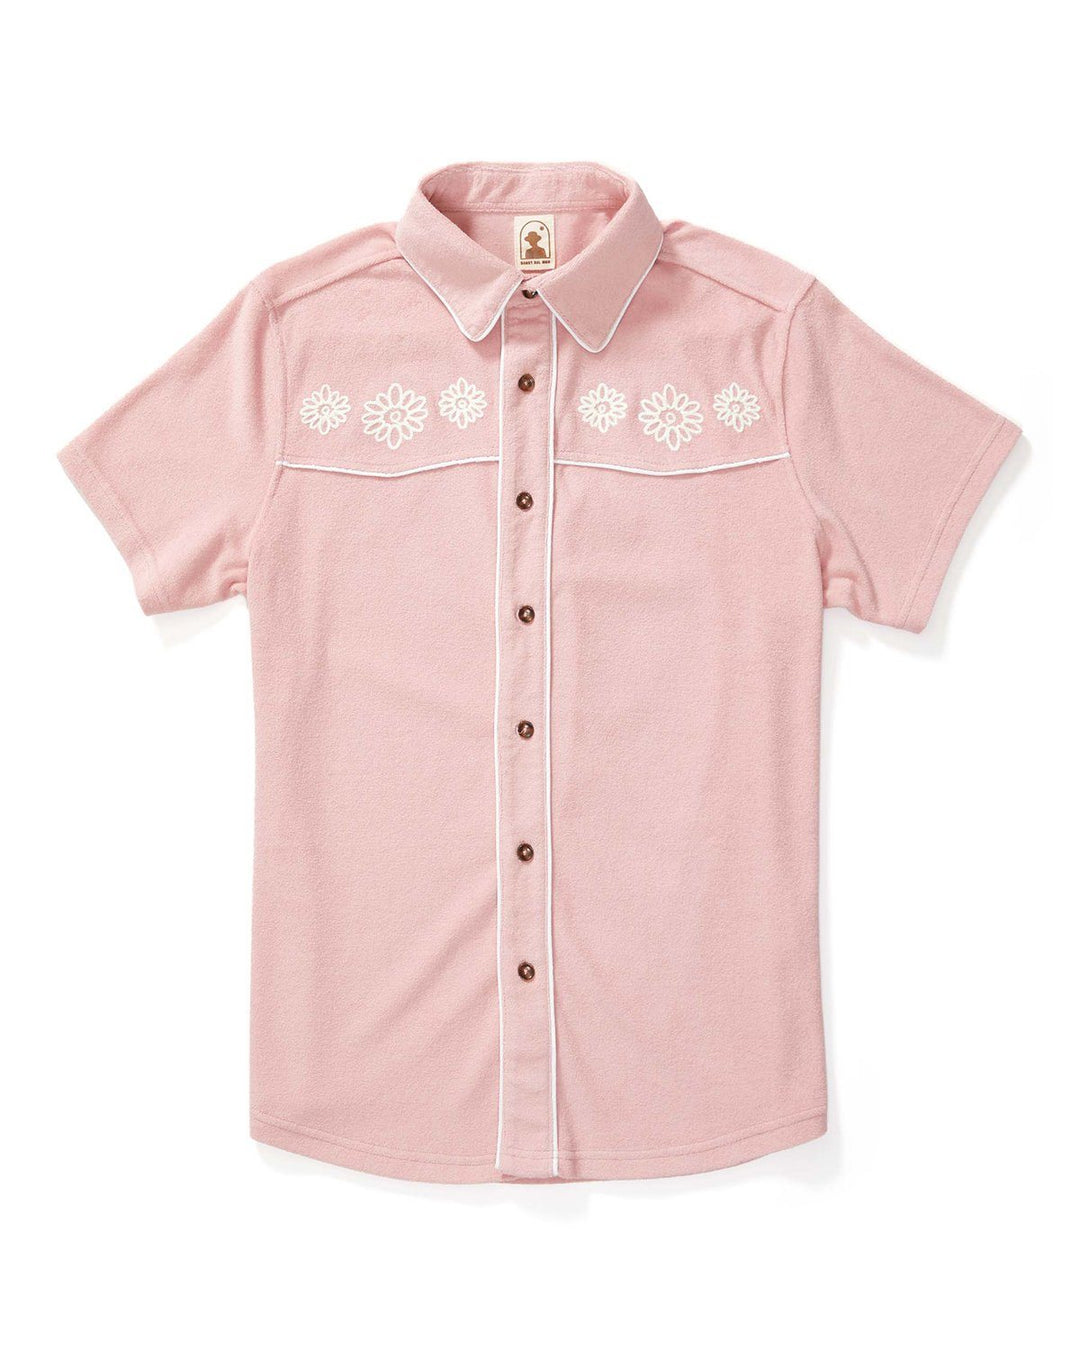 The Gaucho Terry Cloth Shirt - Mauve